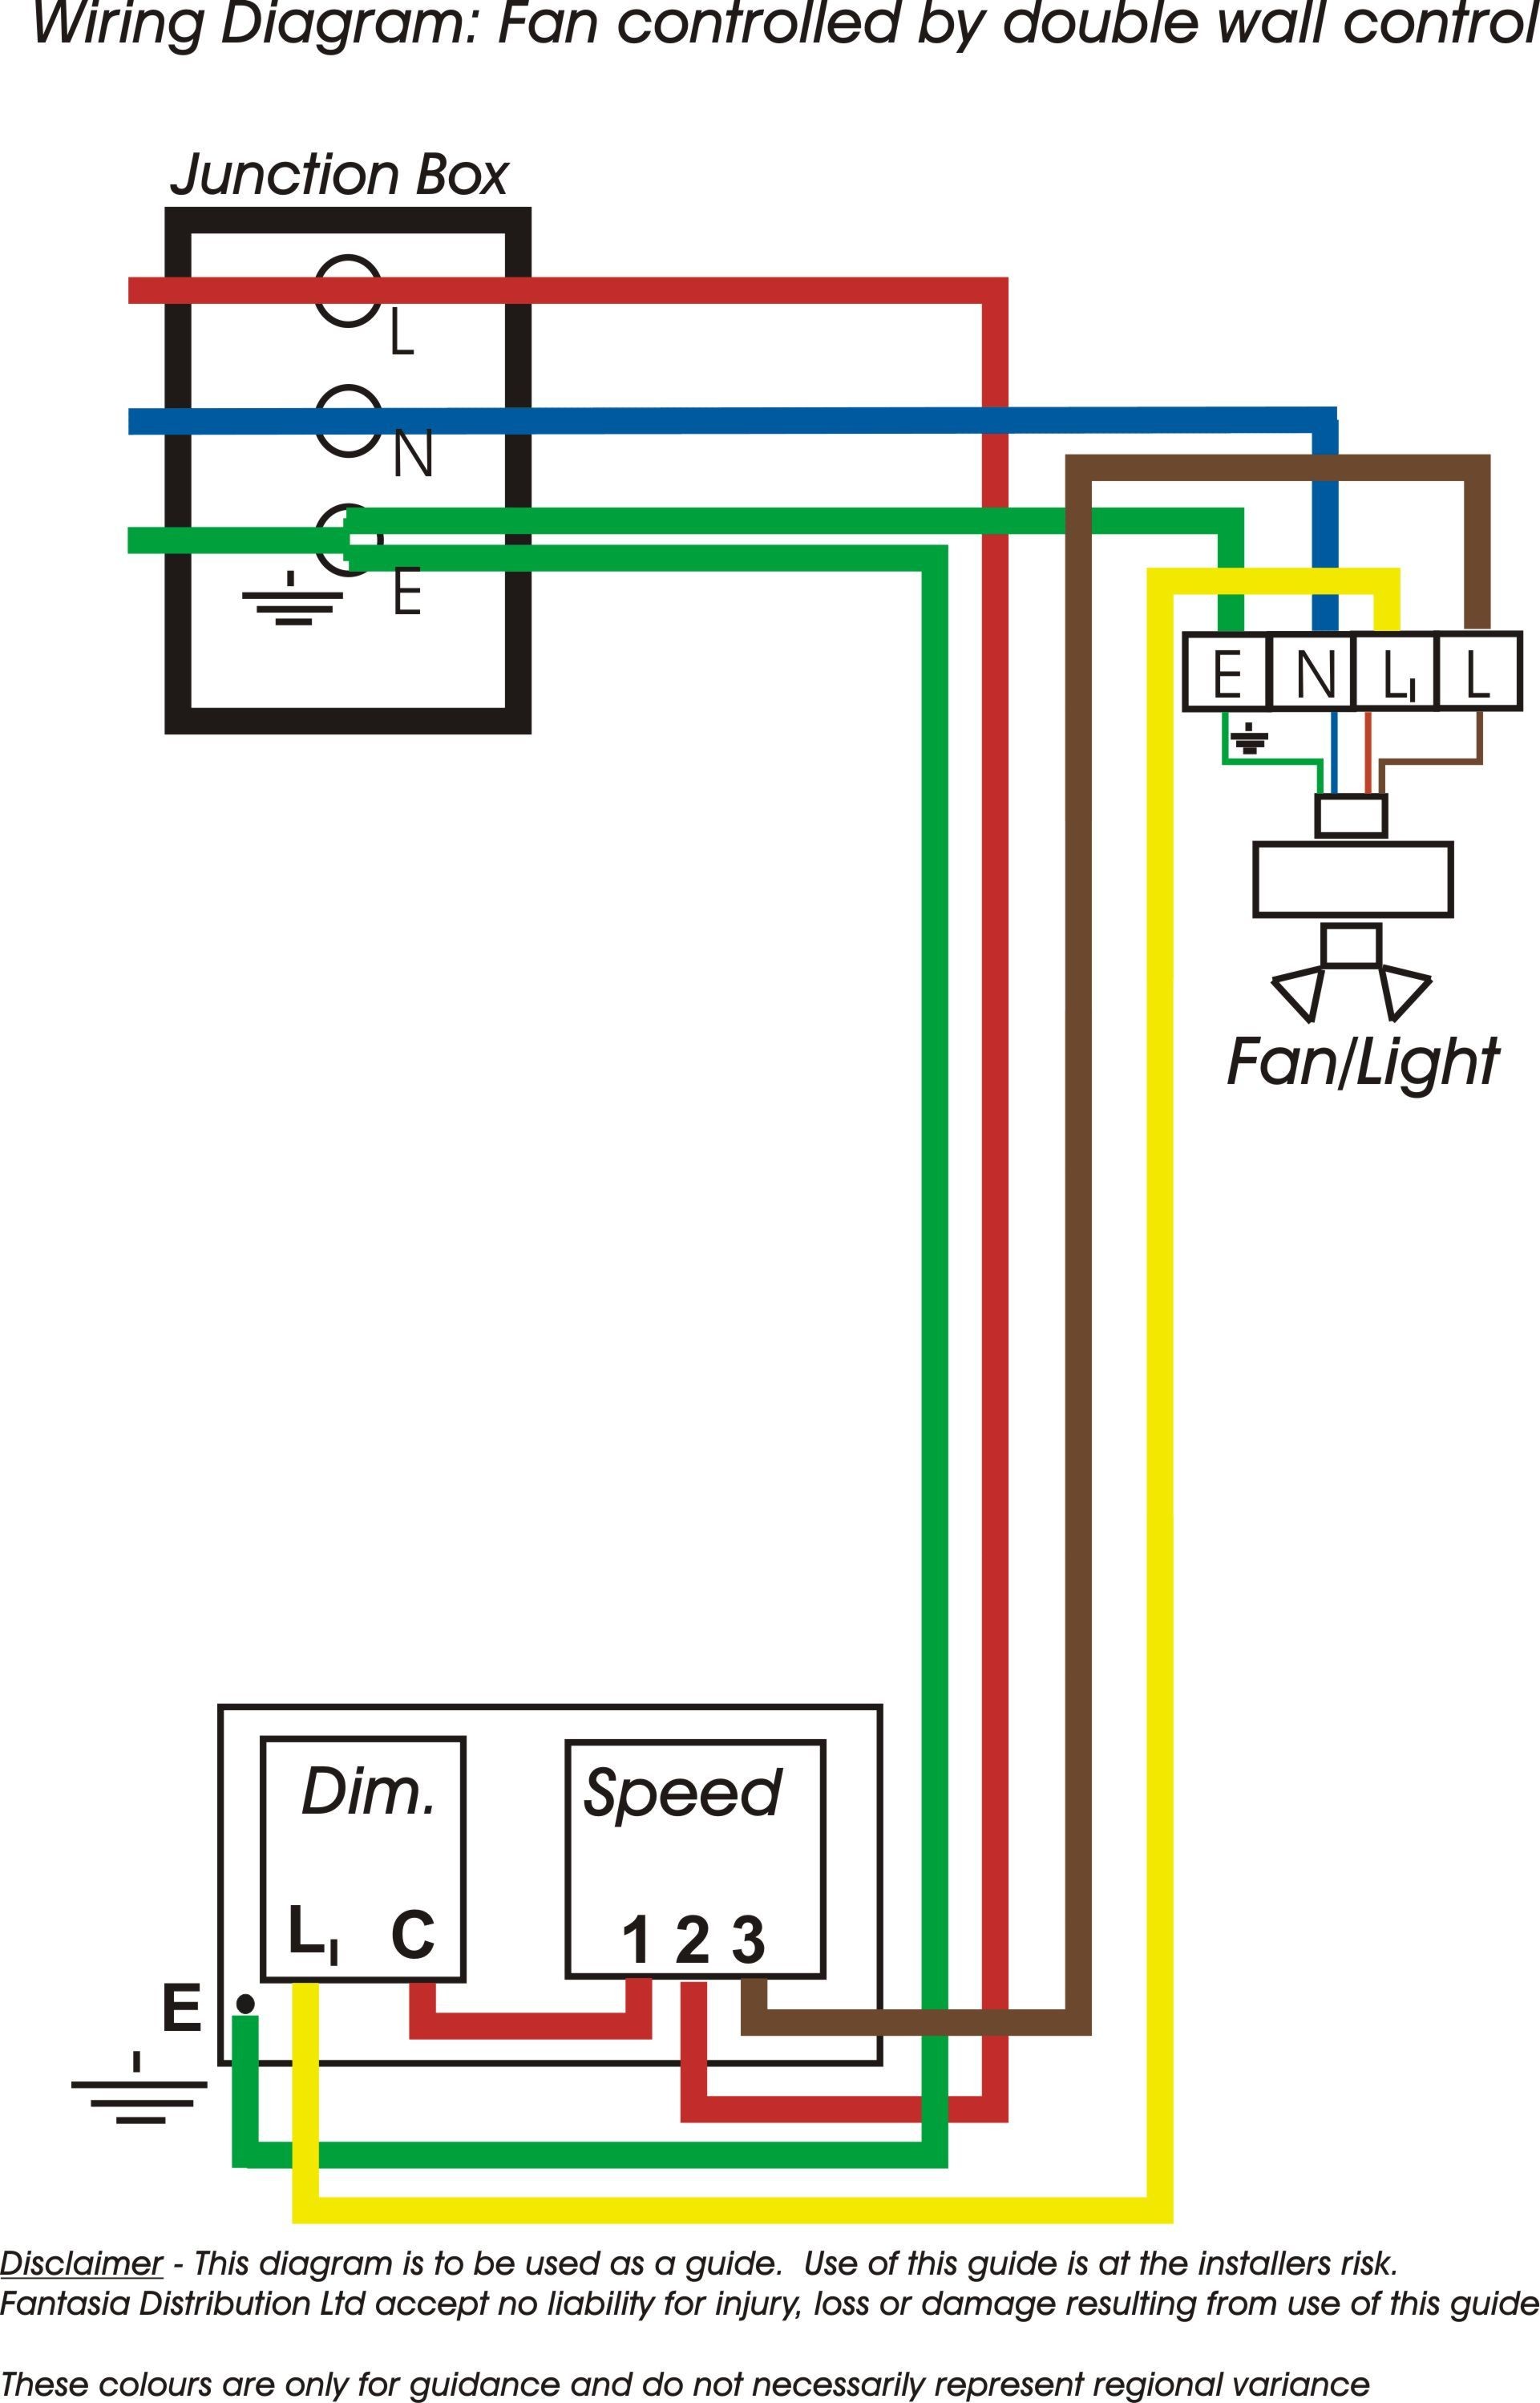 Wiring Diagram for Two Speed attic Fan Switch Wiring Diagram for Ceiling Fan with Light Switch Of Wiring Diagram for Two Speed attic Fan Switch